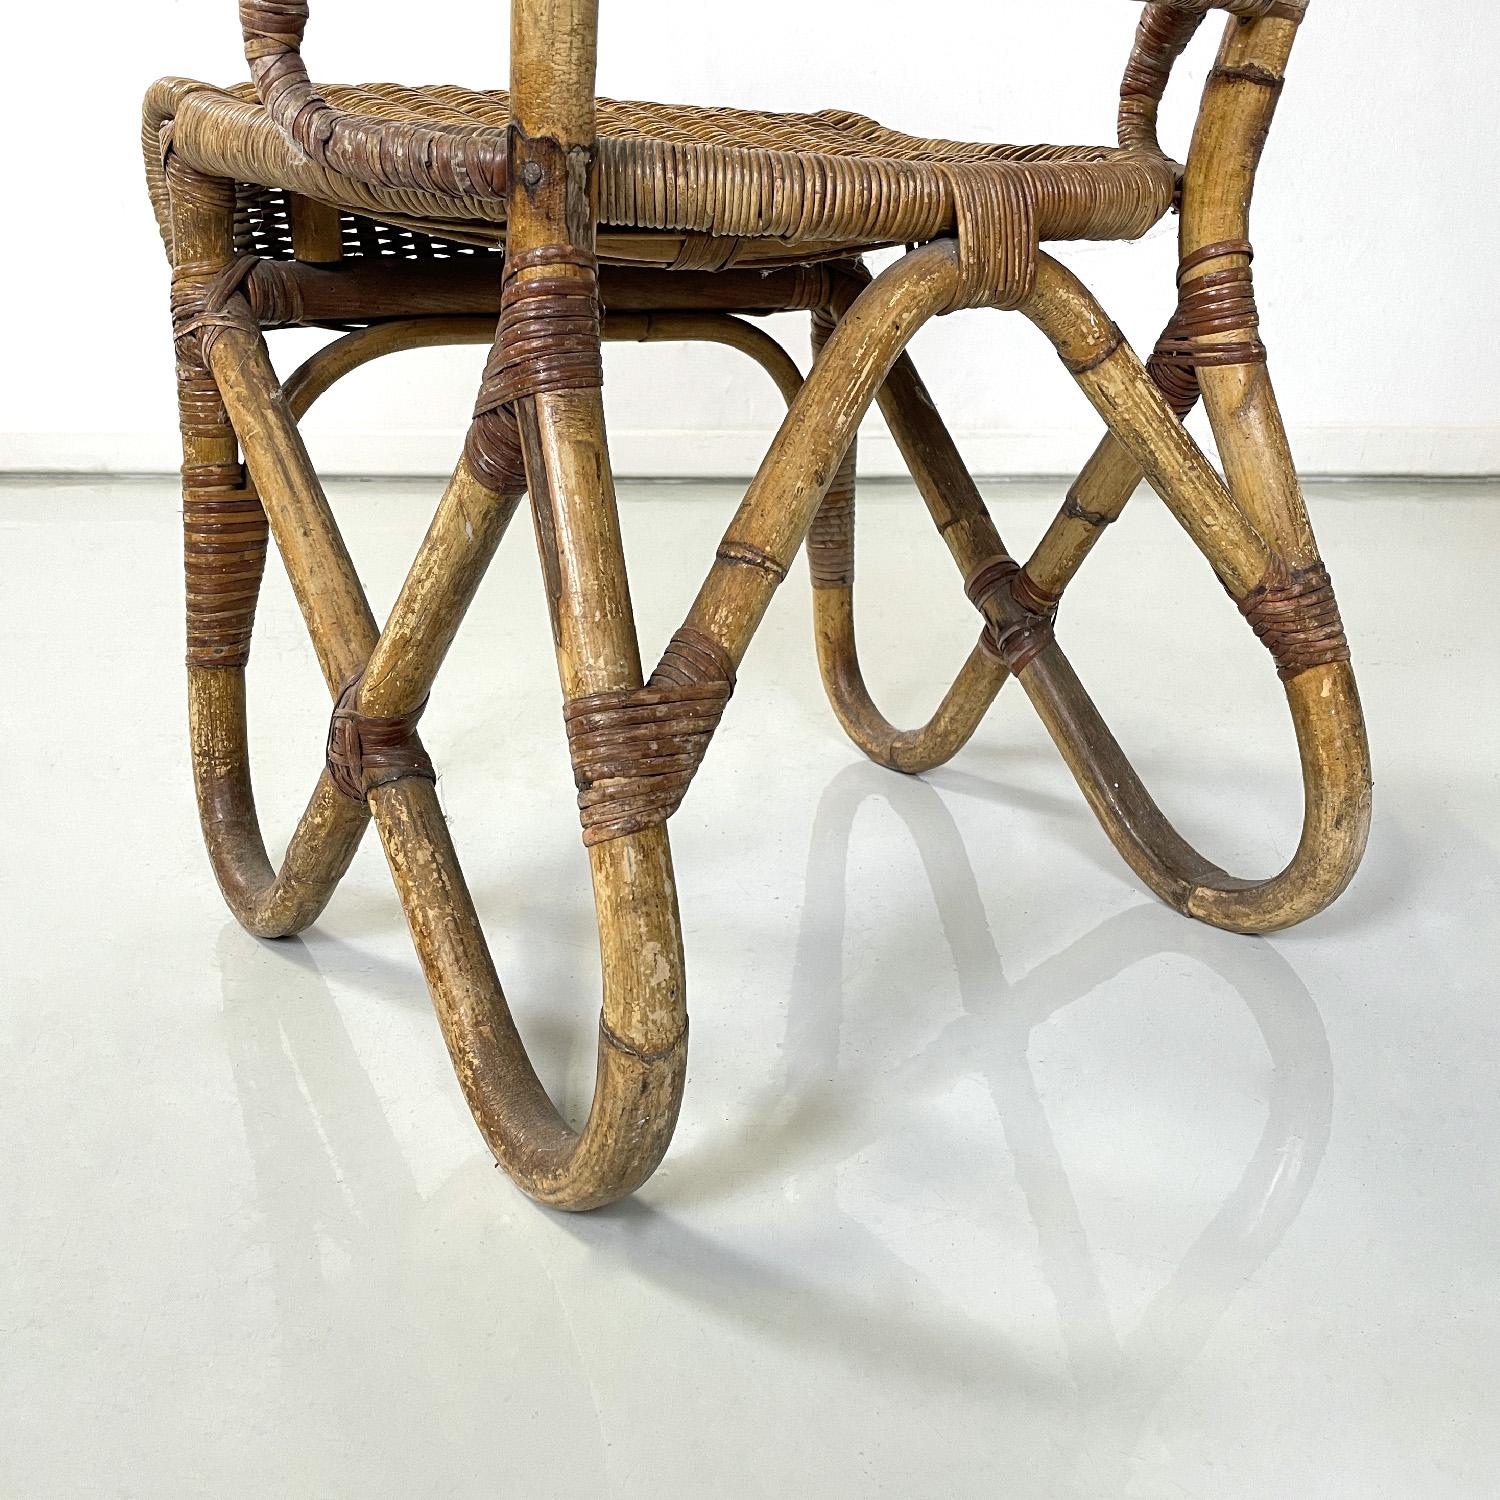 Italiana antique rattan chairs by Mongiardino and Bonacina for Bonacina, 1900s For Sale 11